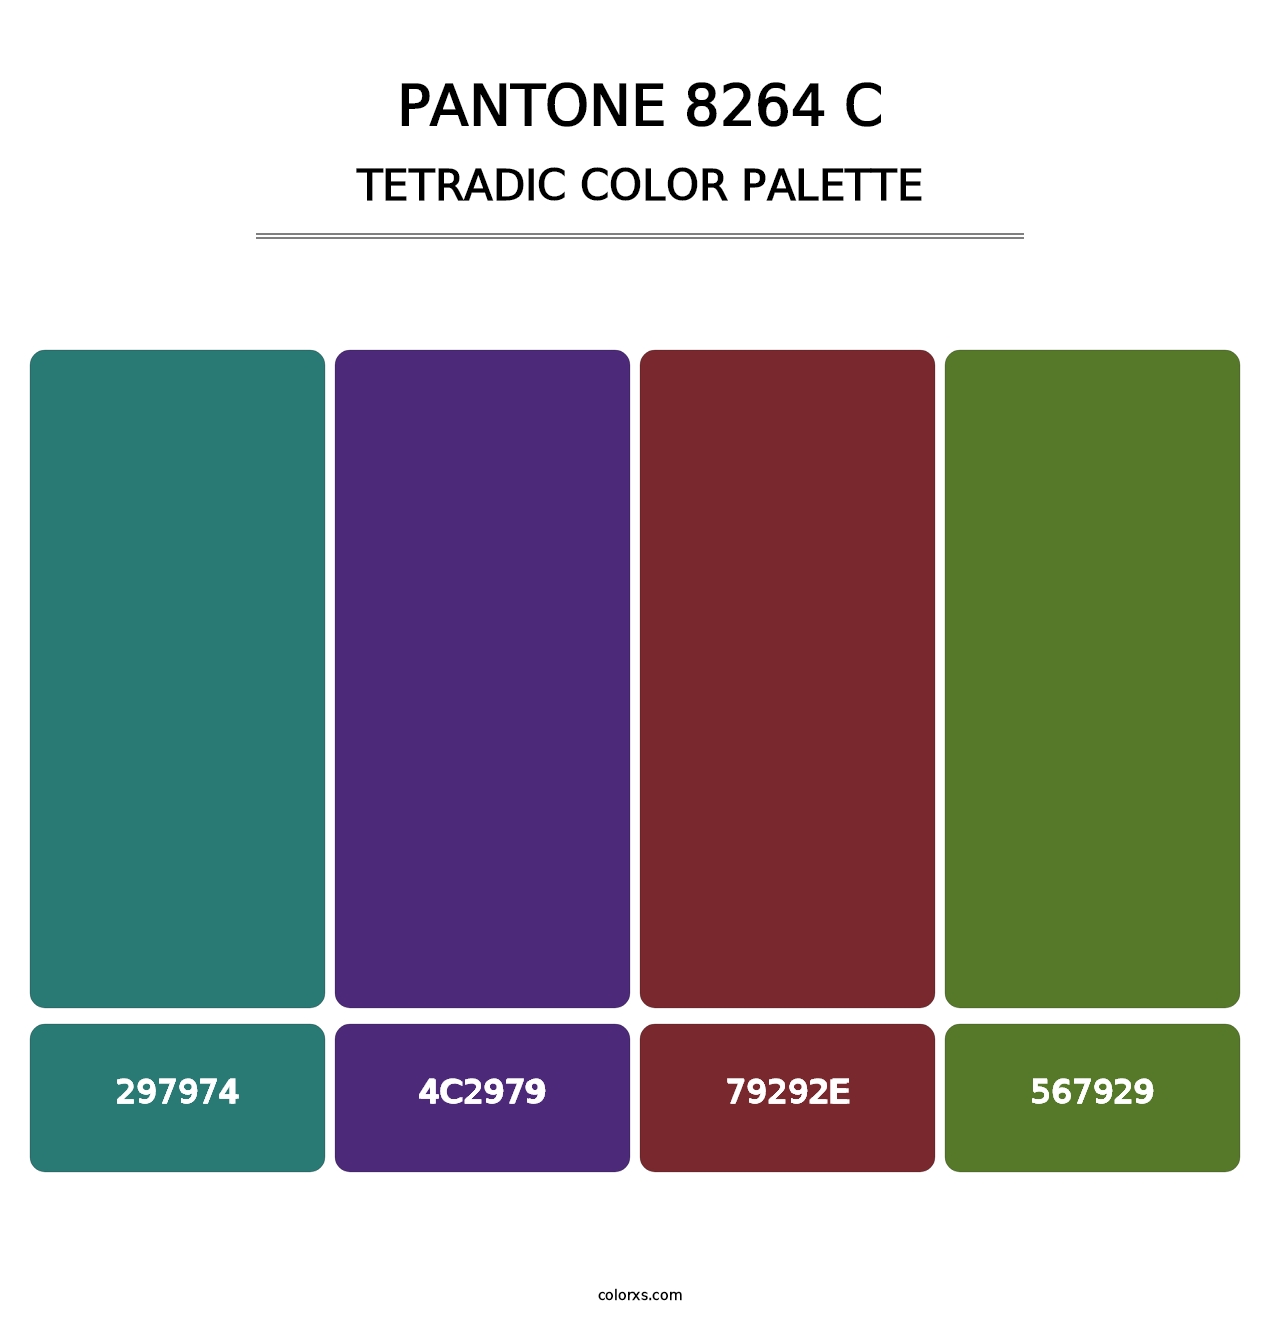 PANTONE 8264 C - Tetradic Color Palette